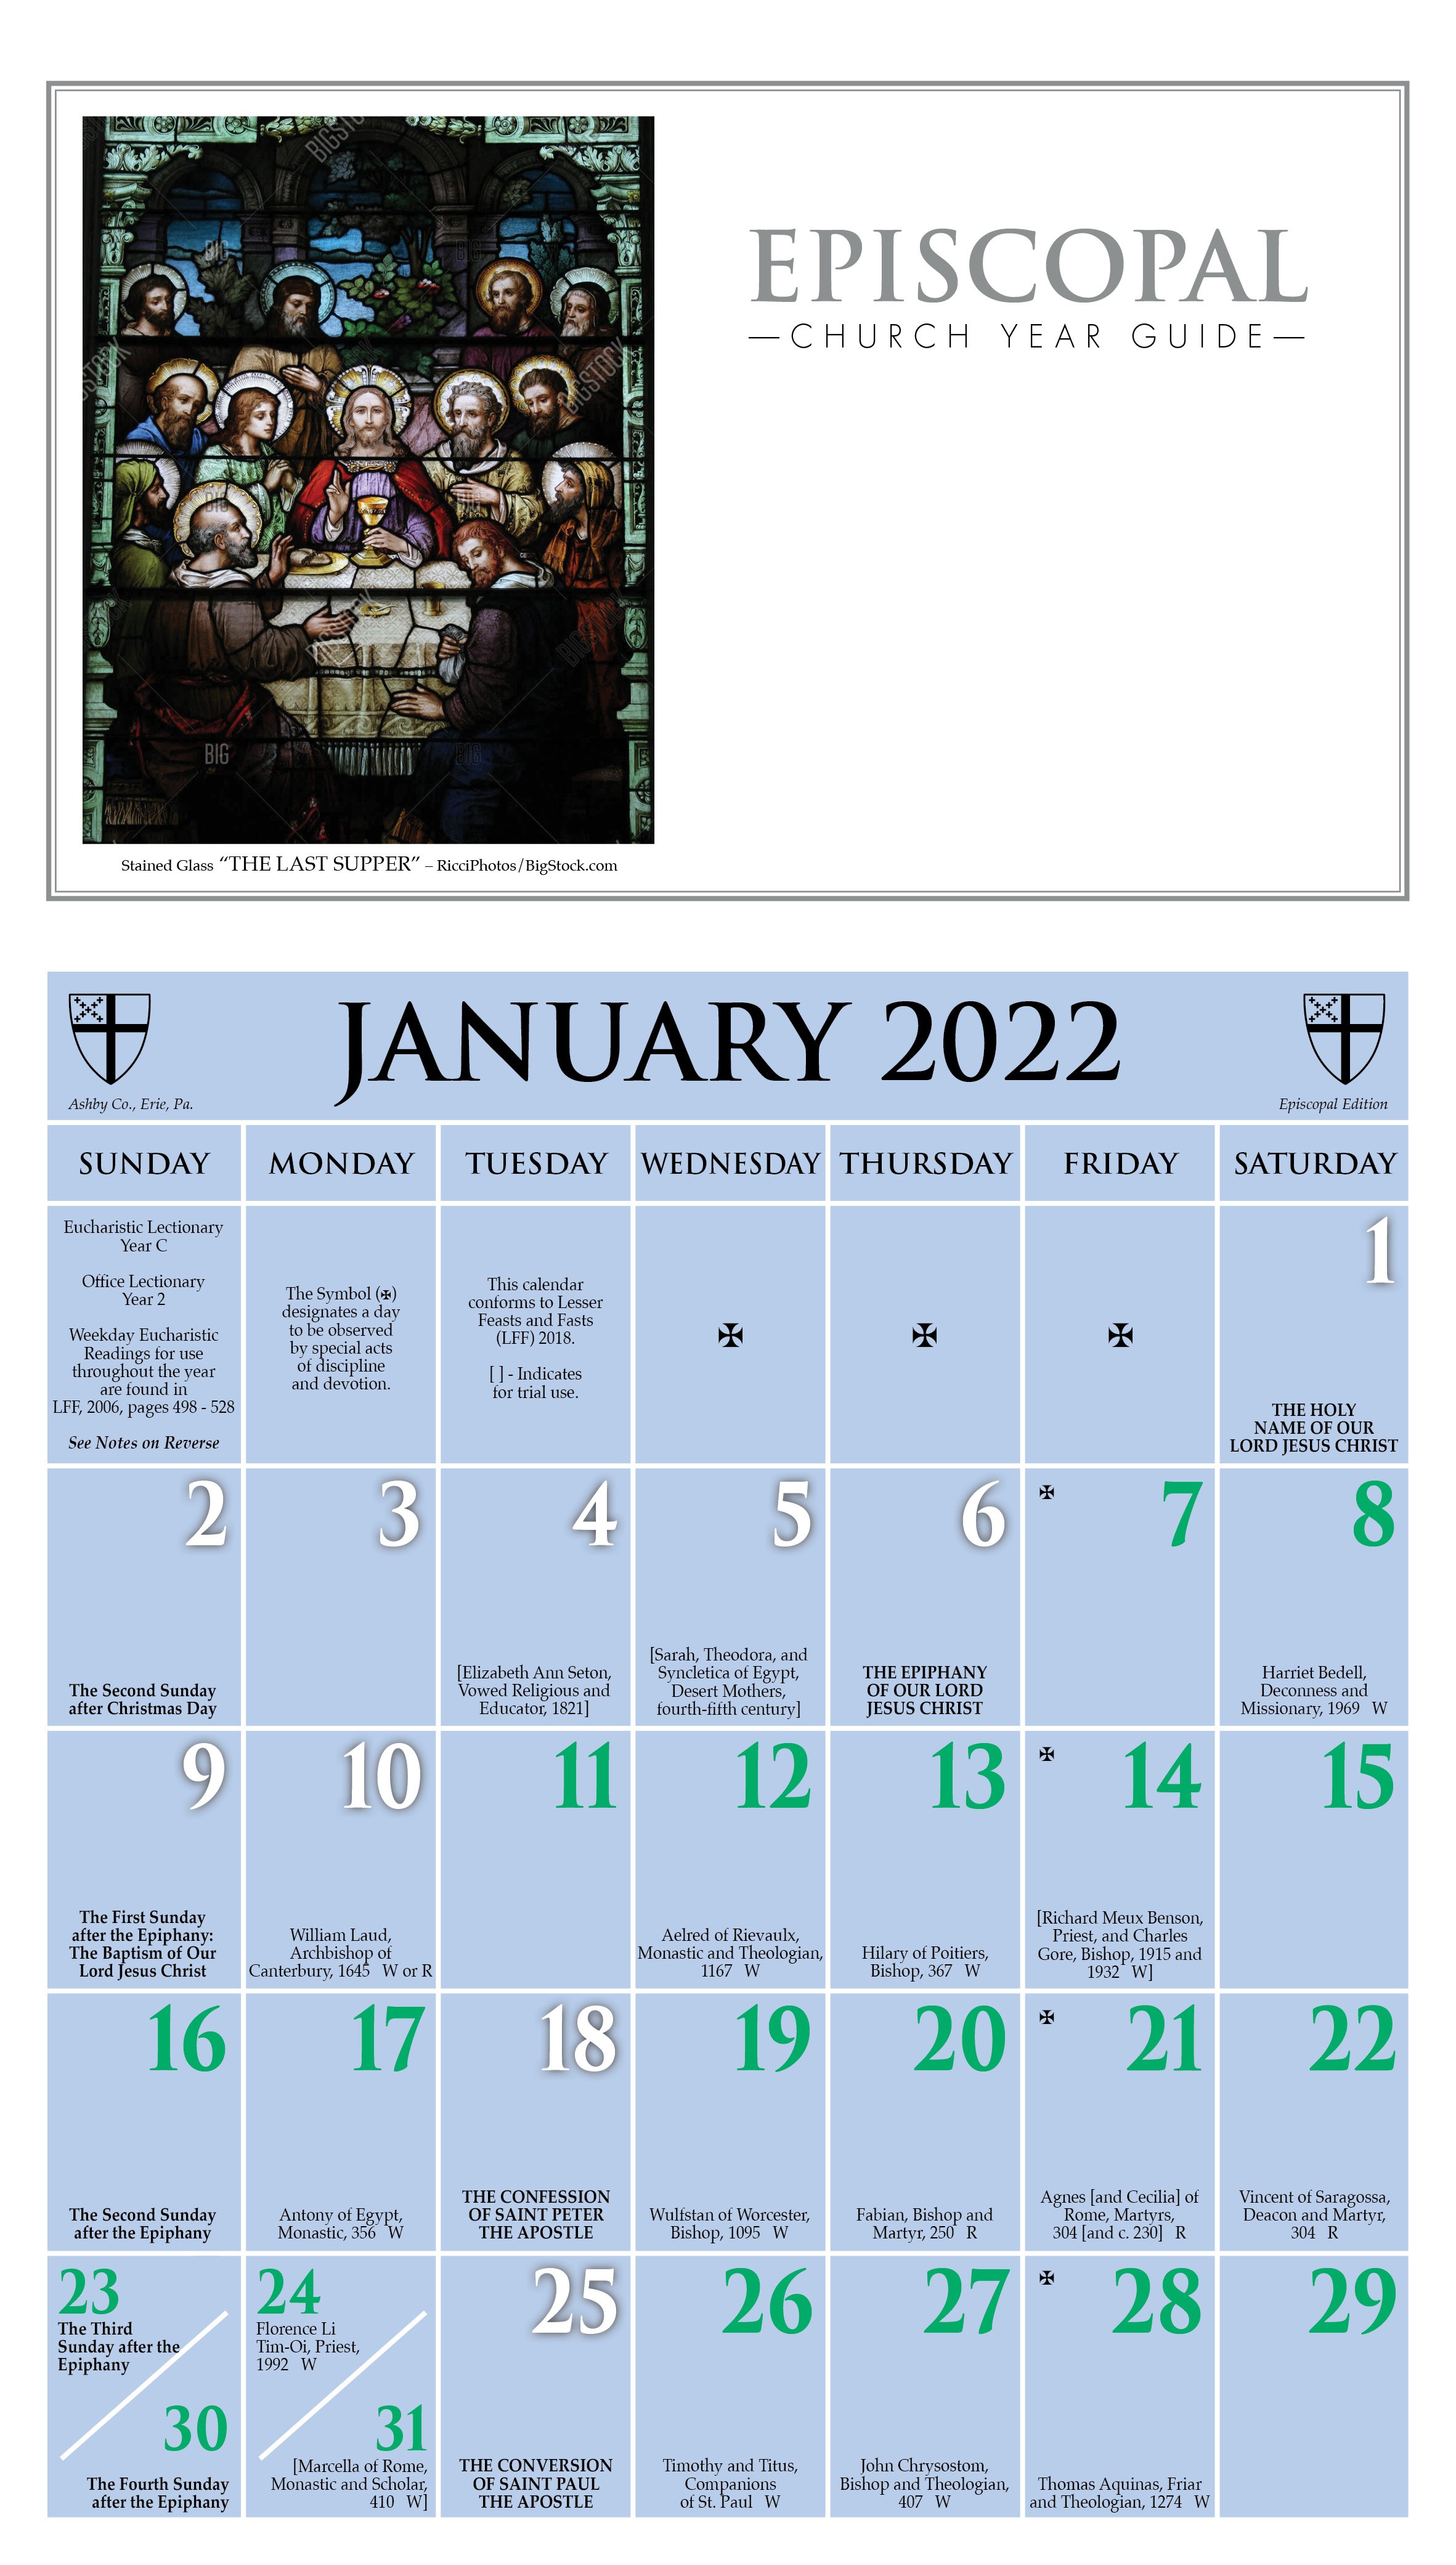 Tcnj 2022 Calendar Churchpublishing.org: 2022 Episcopal Church Year Guide Kalendar